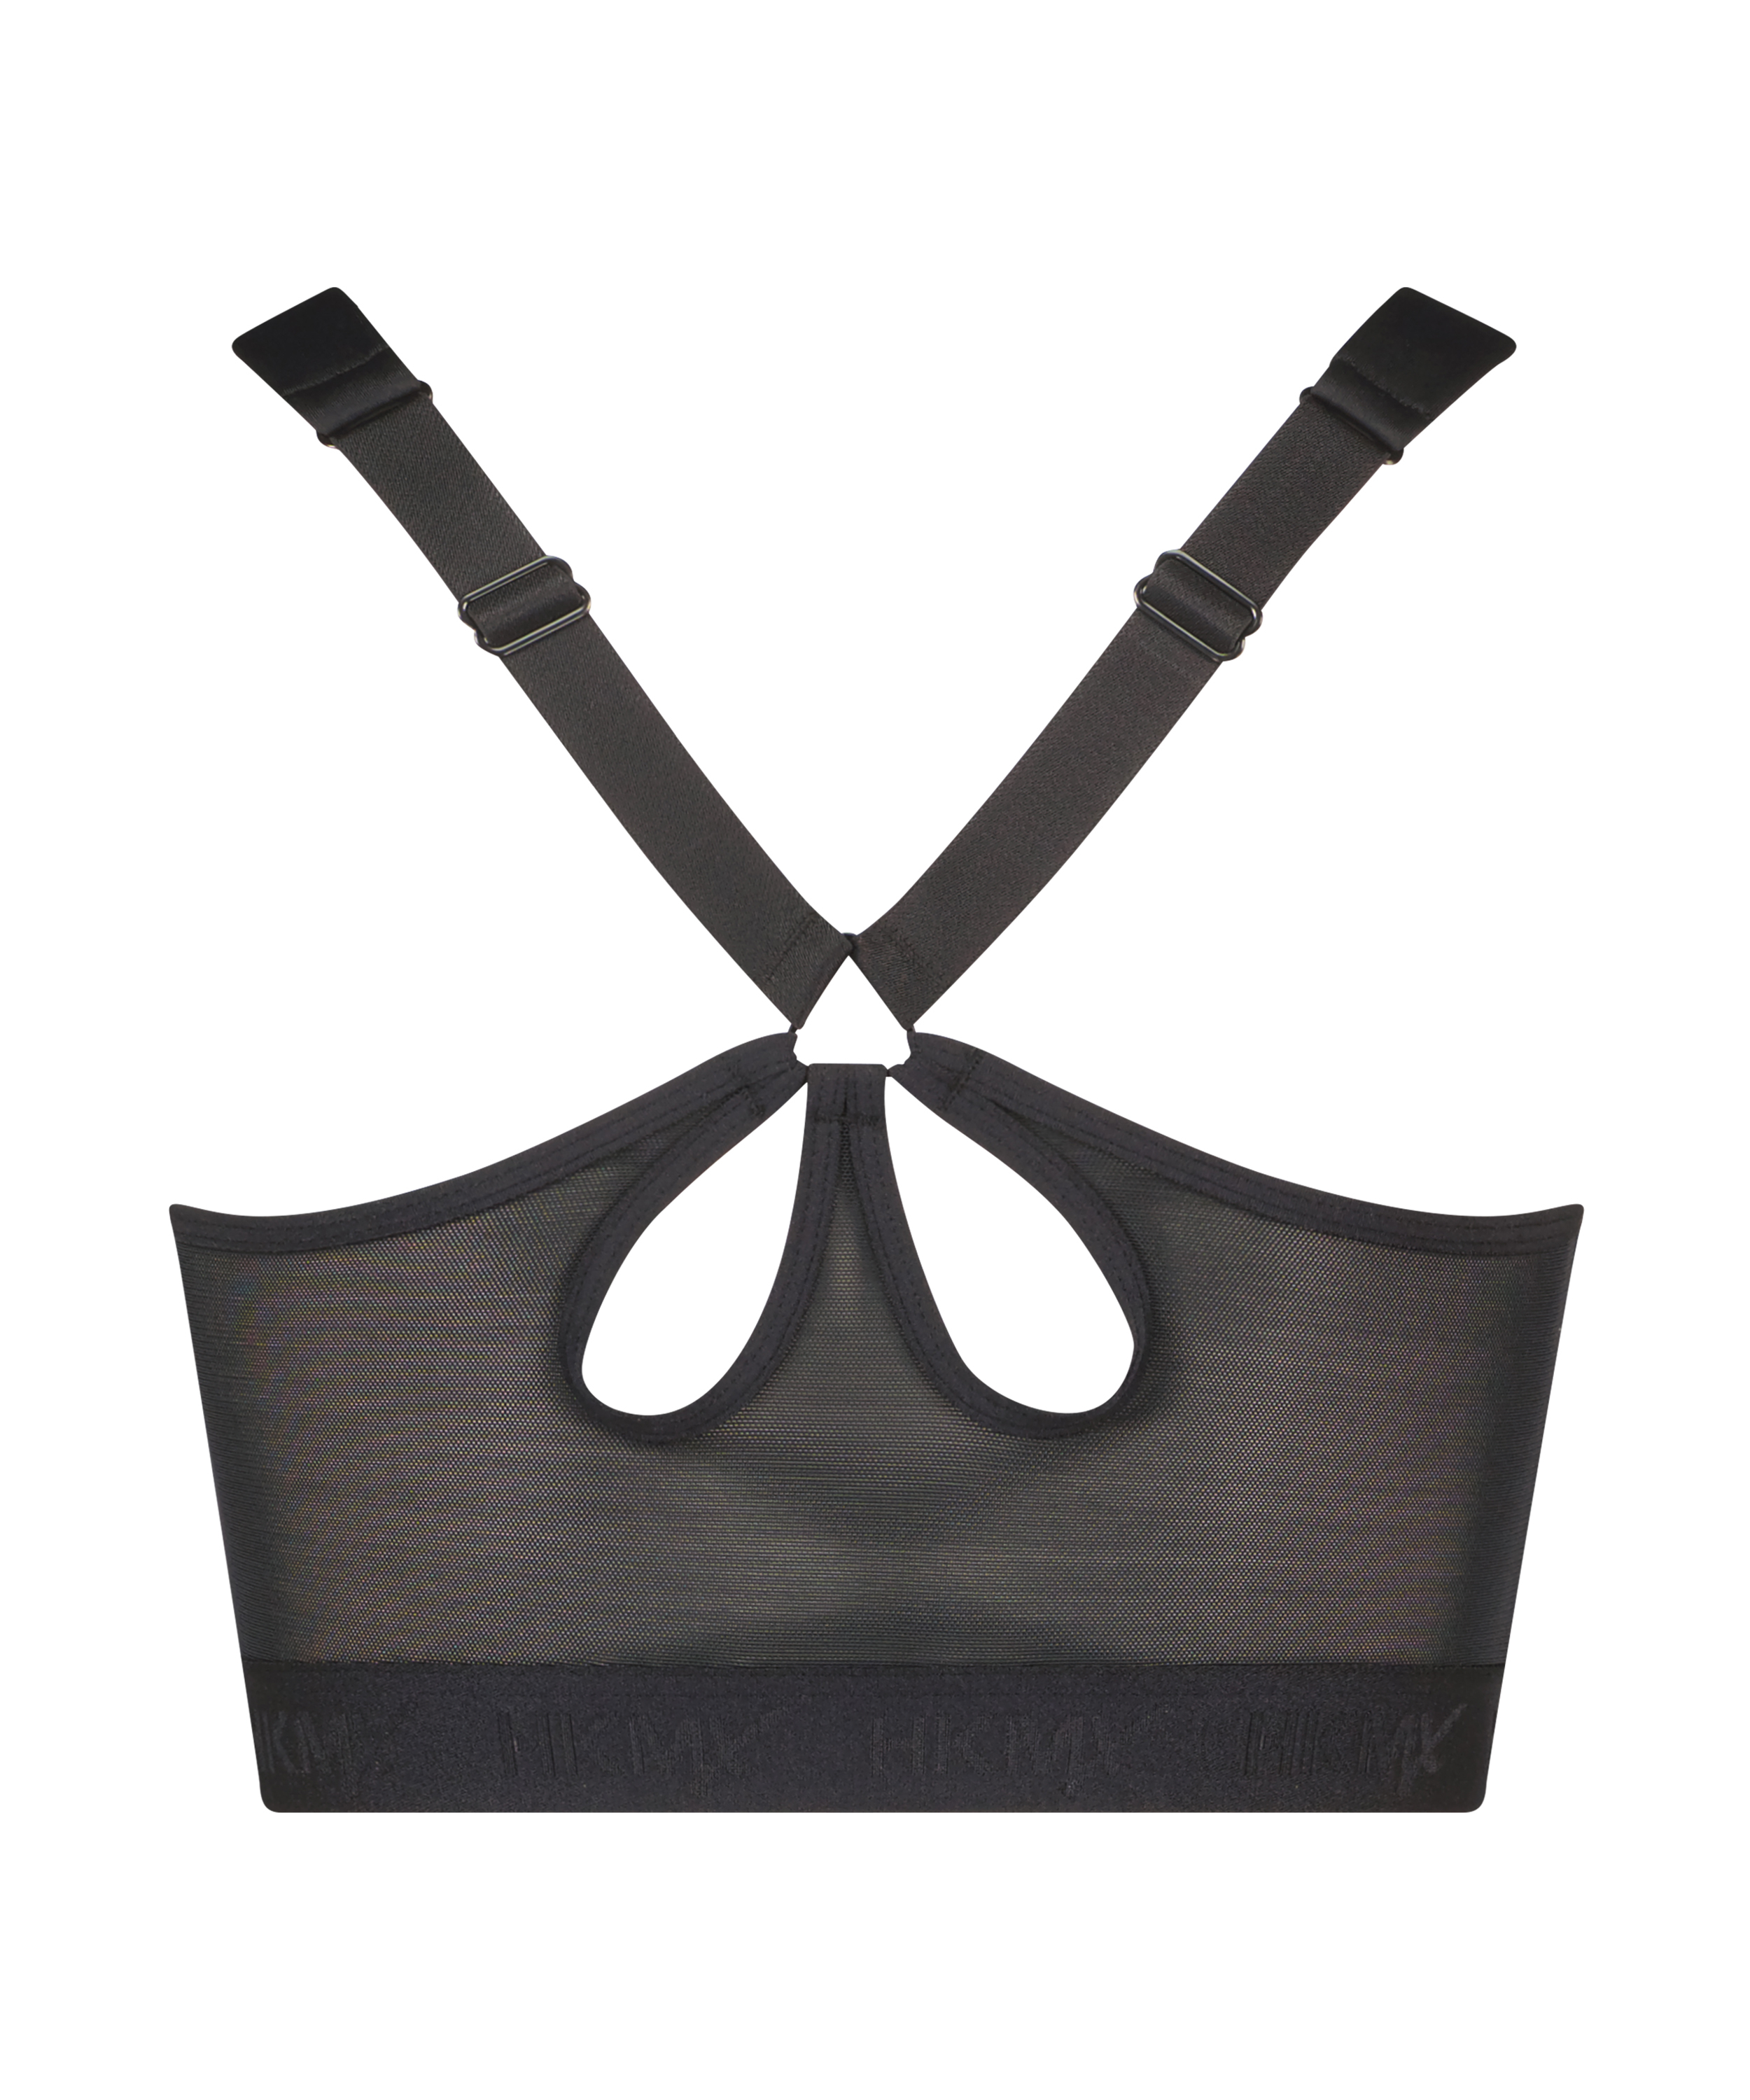 HKMX Sports bra The Pro Level 3, Black, main